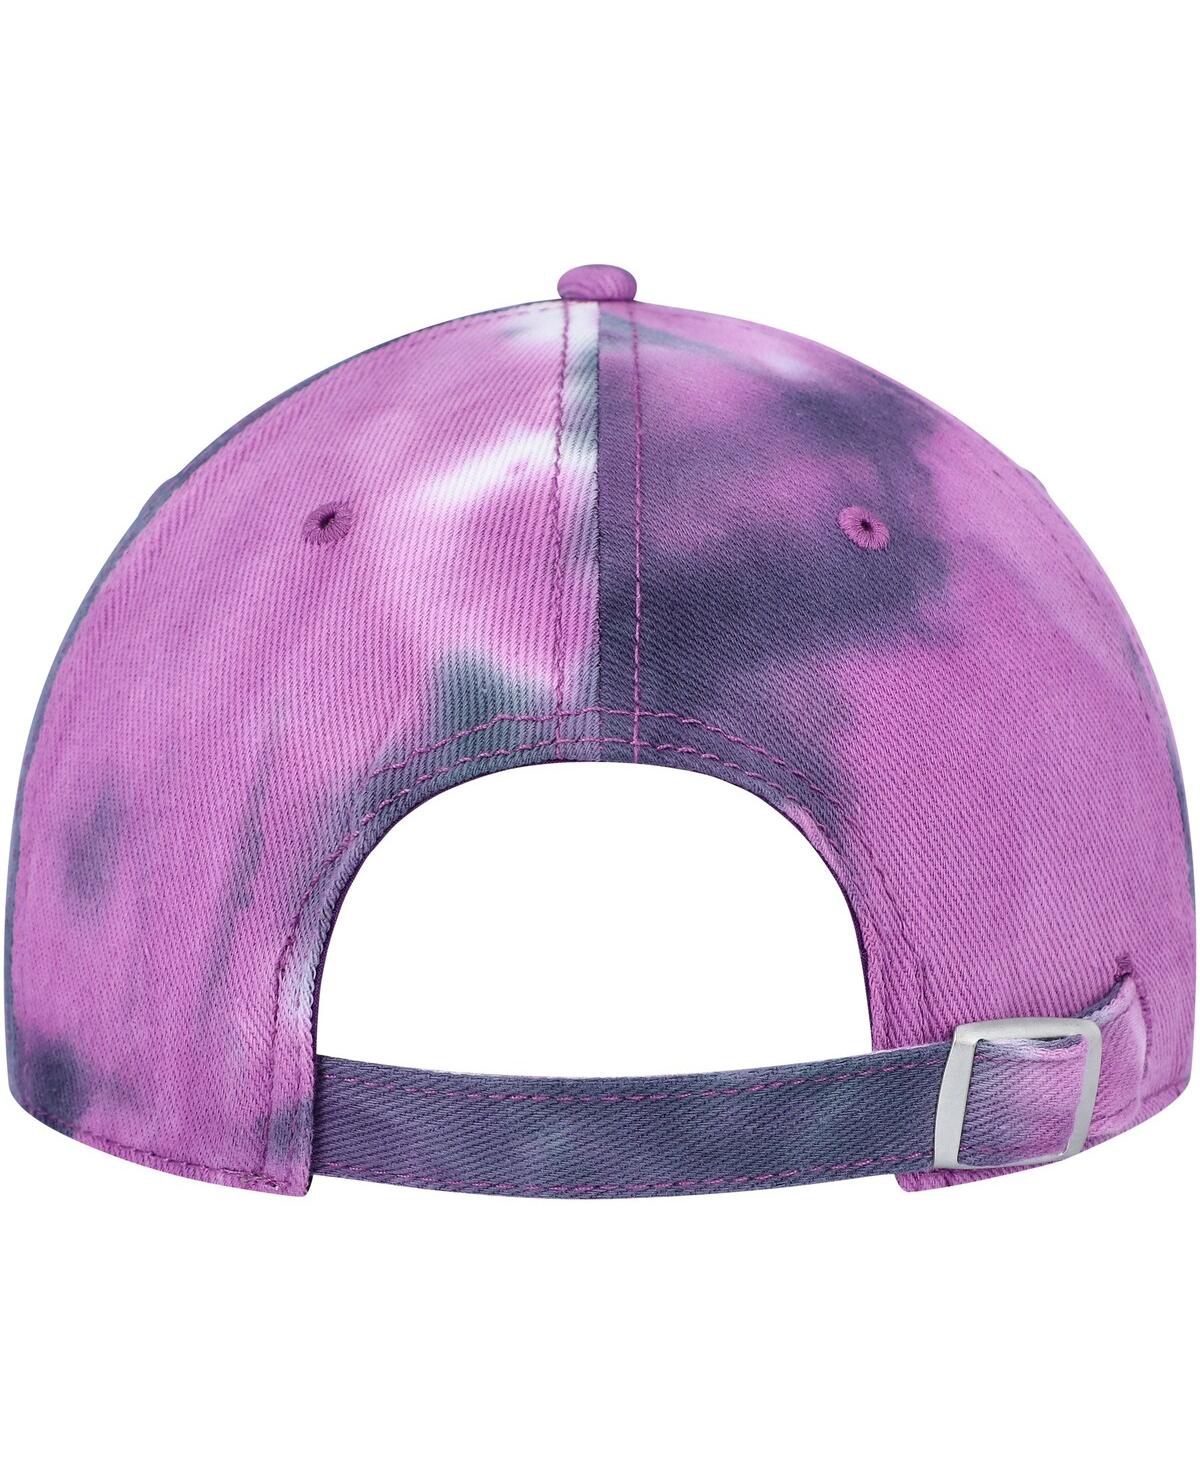 Shop American Needle Men's  Purple Pink Floyd Ballpark Adjustable Hat